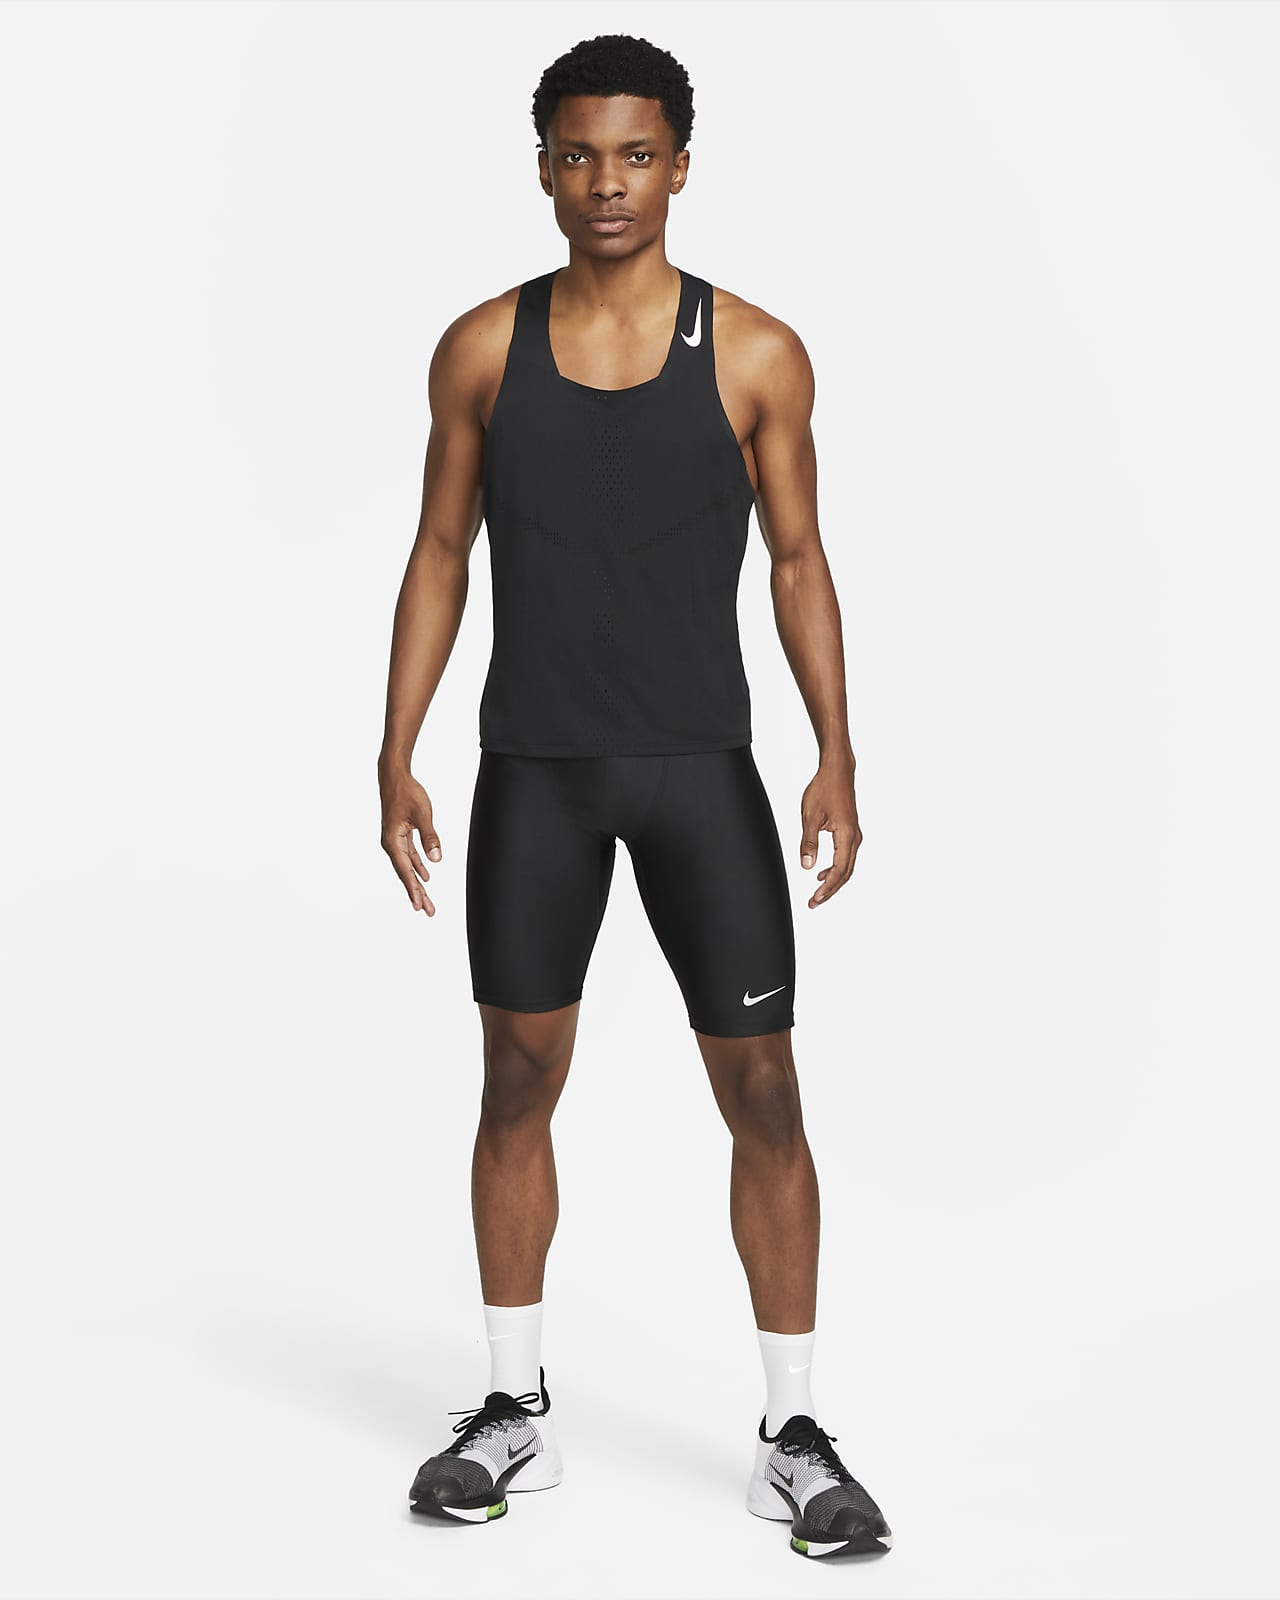  Nike Dri Fit Fast Racing Leggings S : Clothing, Shoes